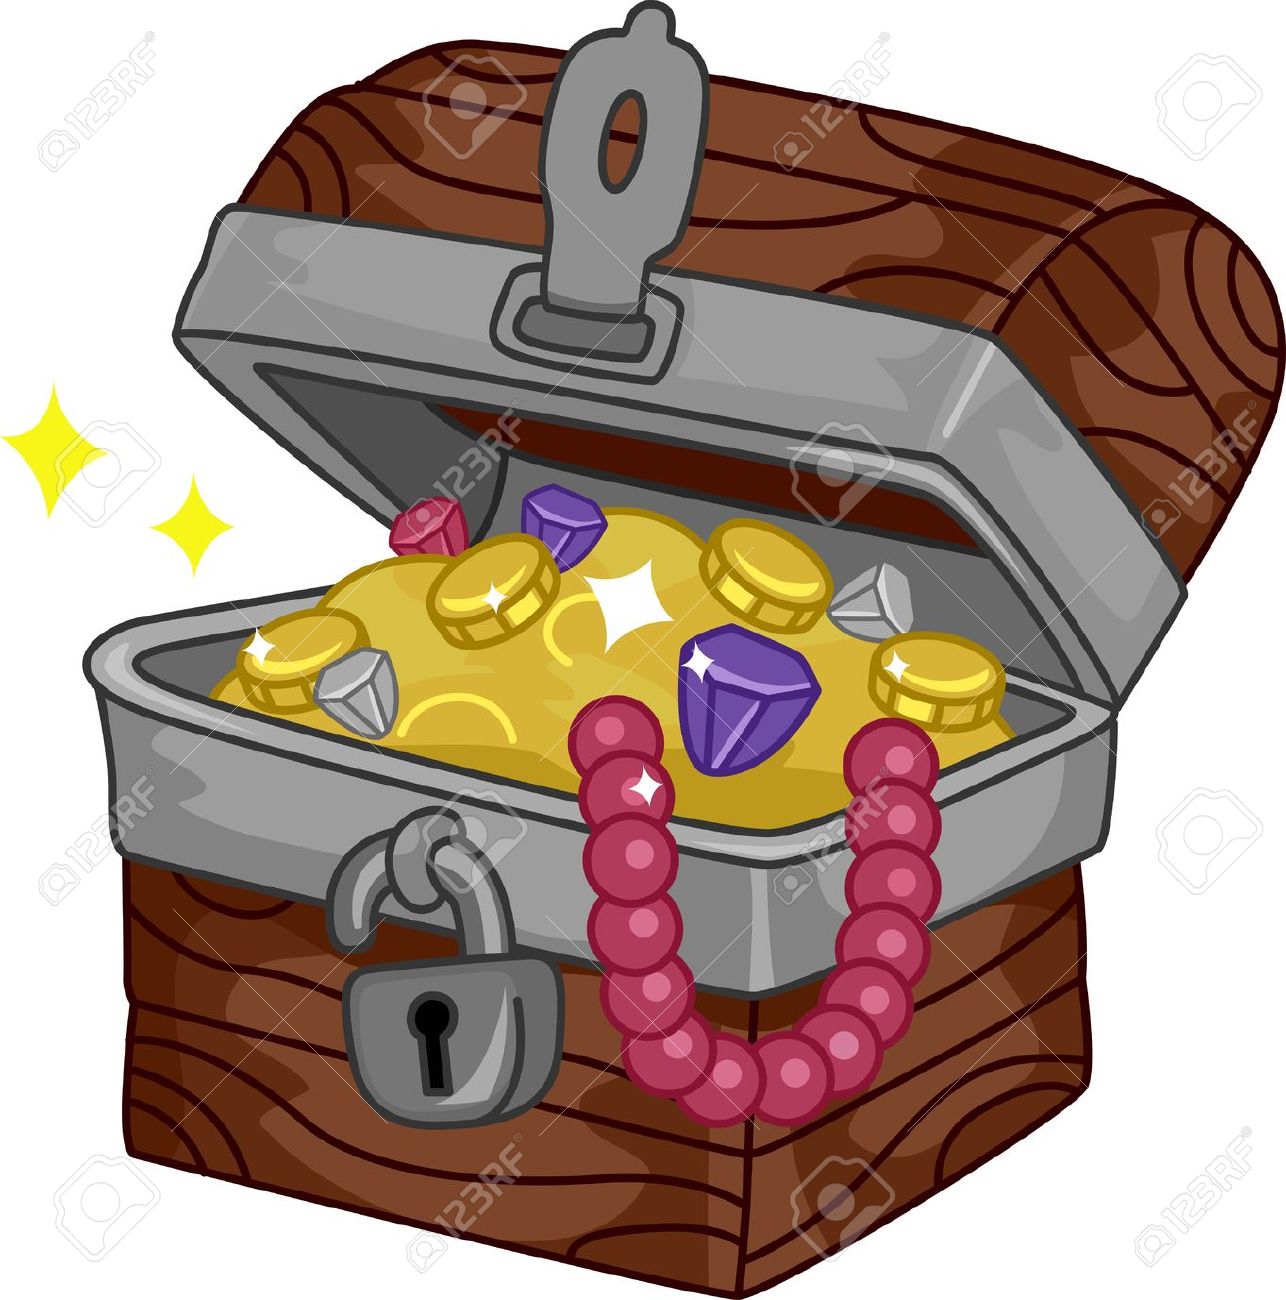 Treasure chest illustration.